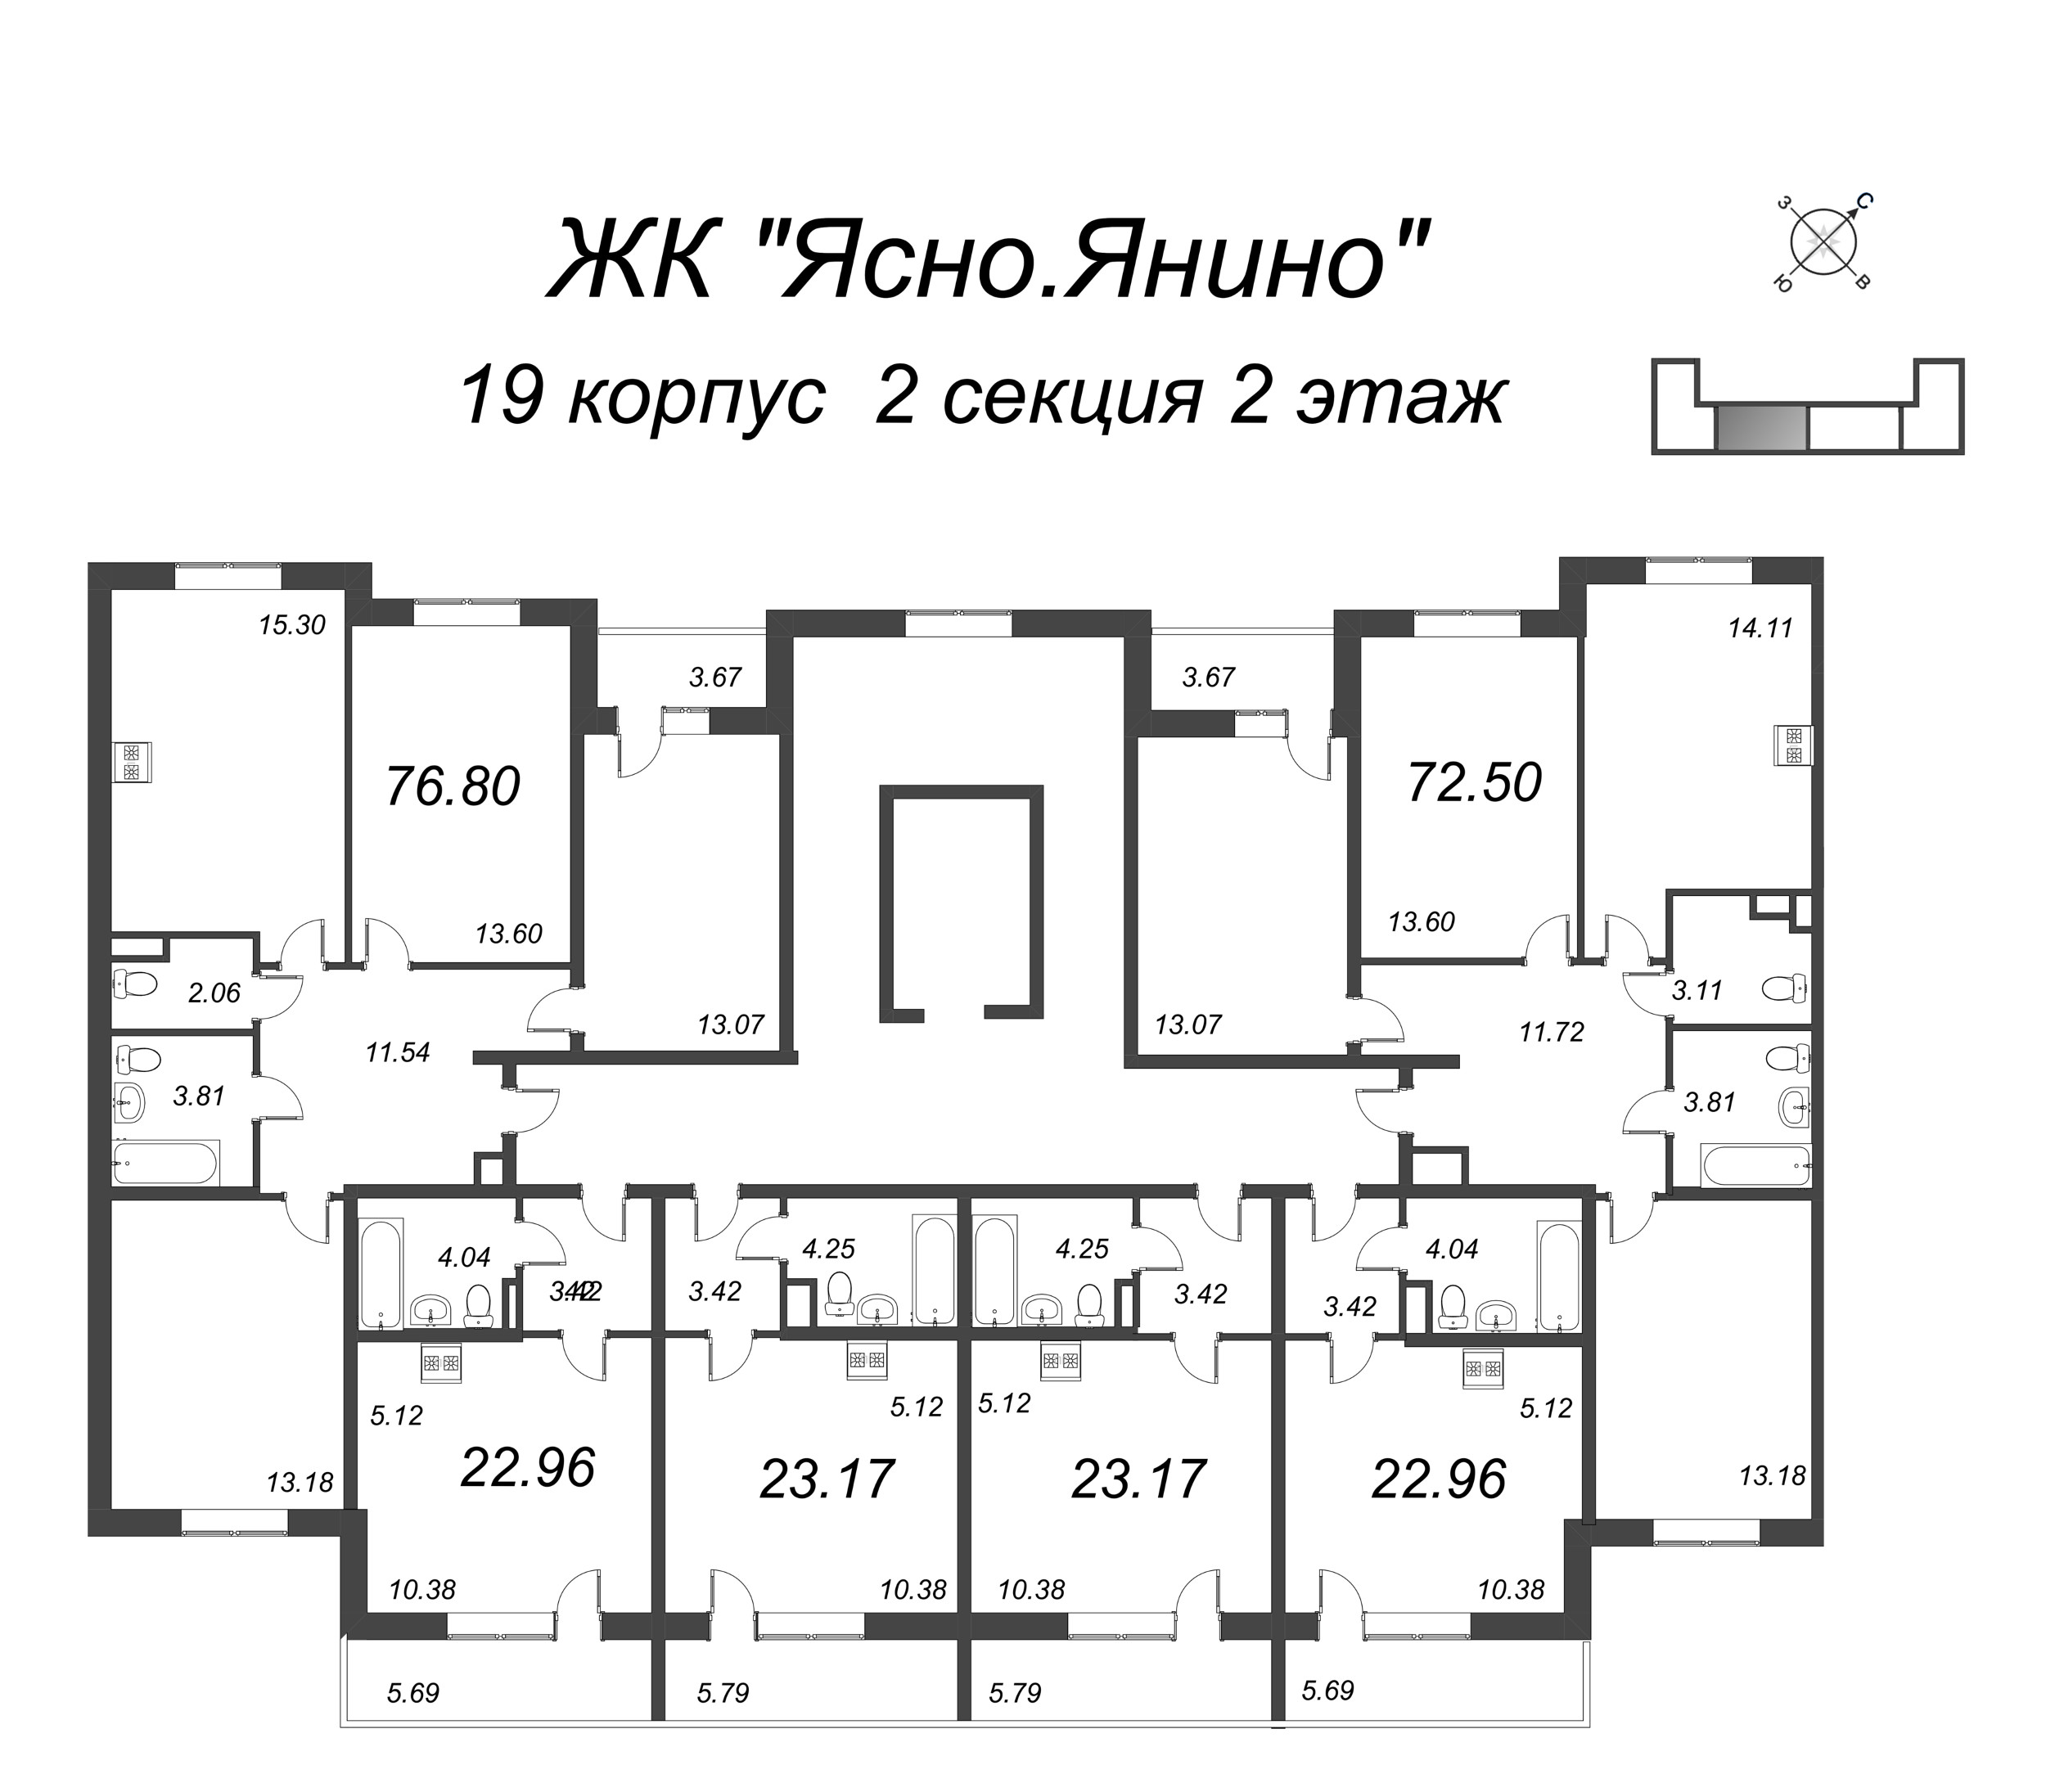 3-комнатная квартира, 72.5 м² в ЖК "Ясно.Янино" - планировка этажа